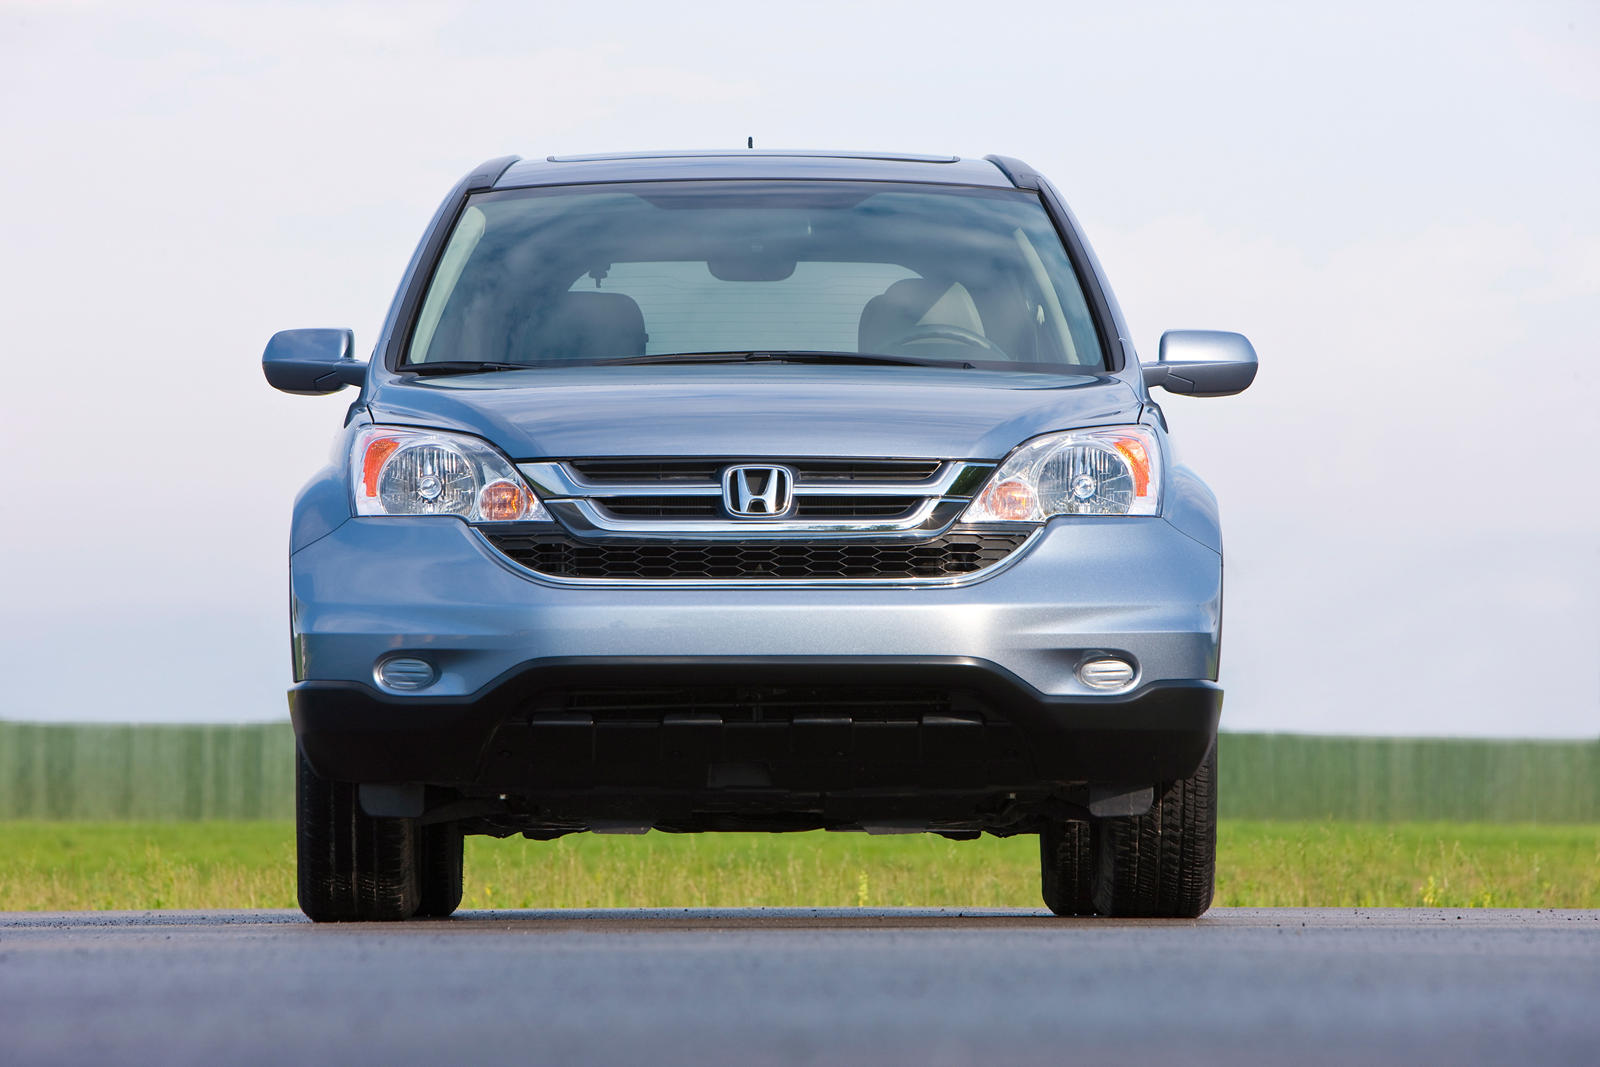 2010 Honda CR-V Front View